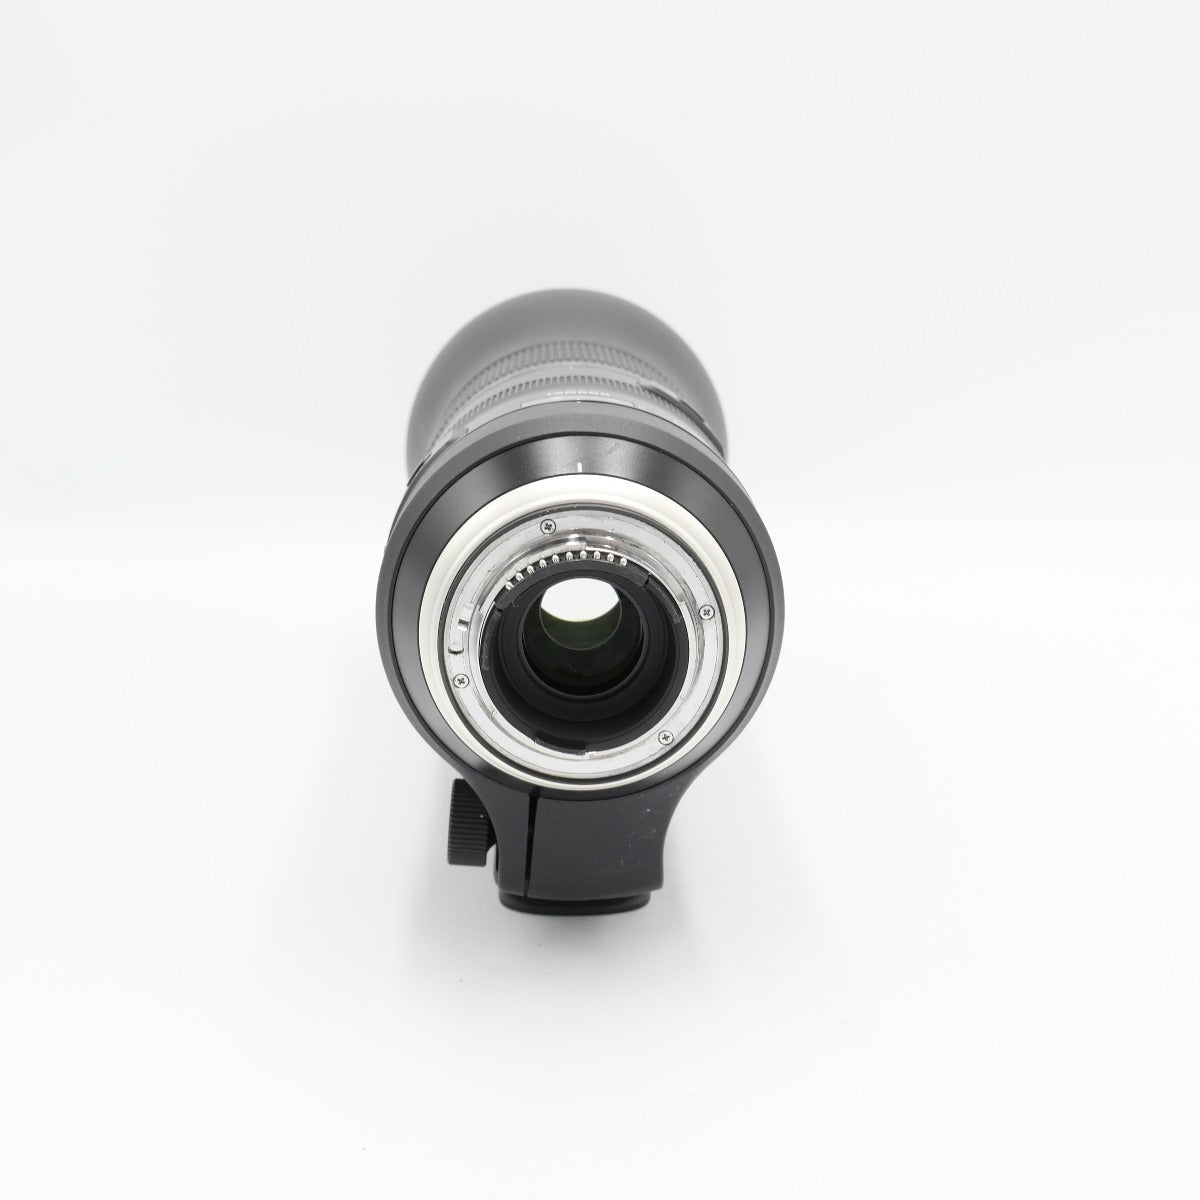 Tamron SP 150-600mm f/5-6.3 Di VC USD G2 - F mount